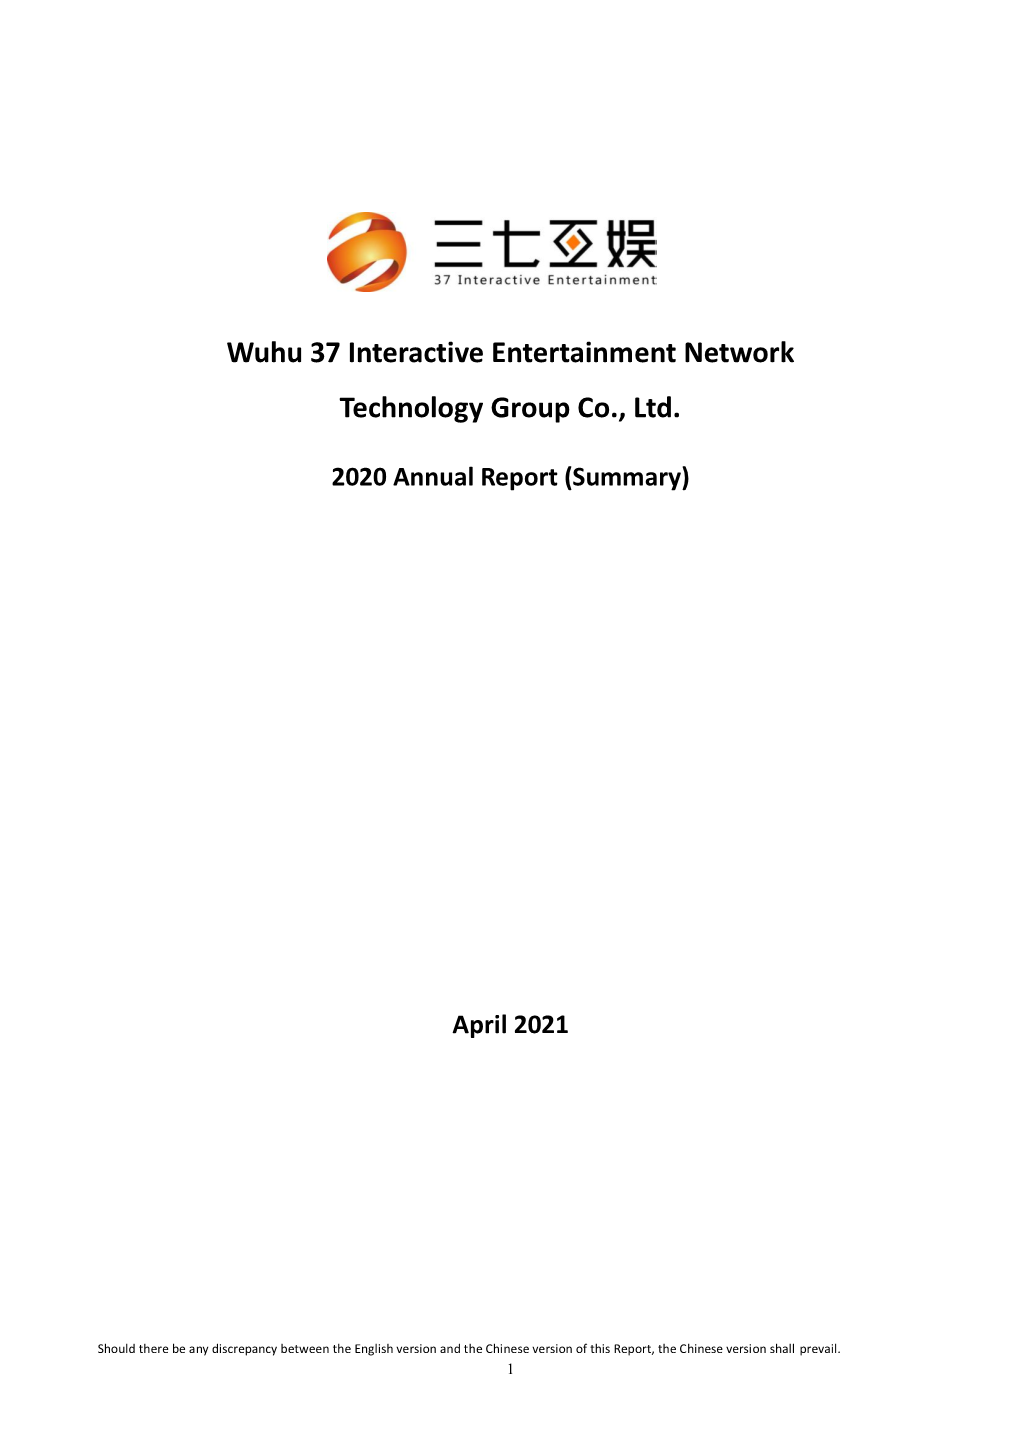 Wuhu 37 Interactive Entertainment Network Technology Group Co., Ltd